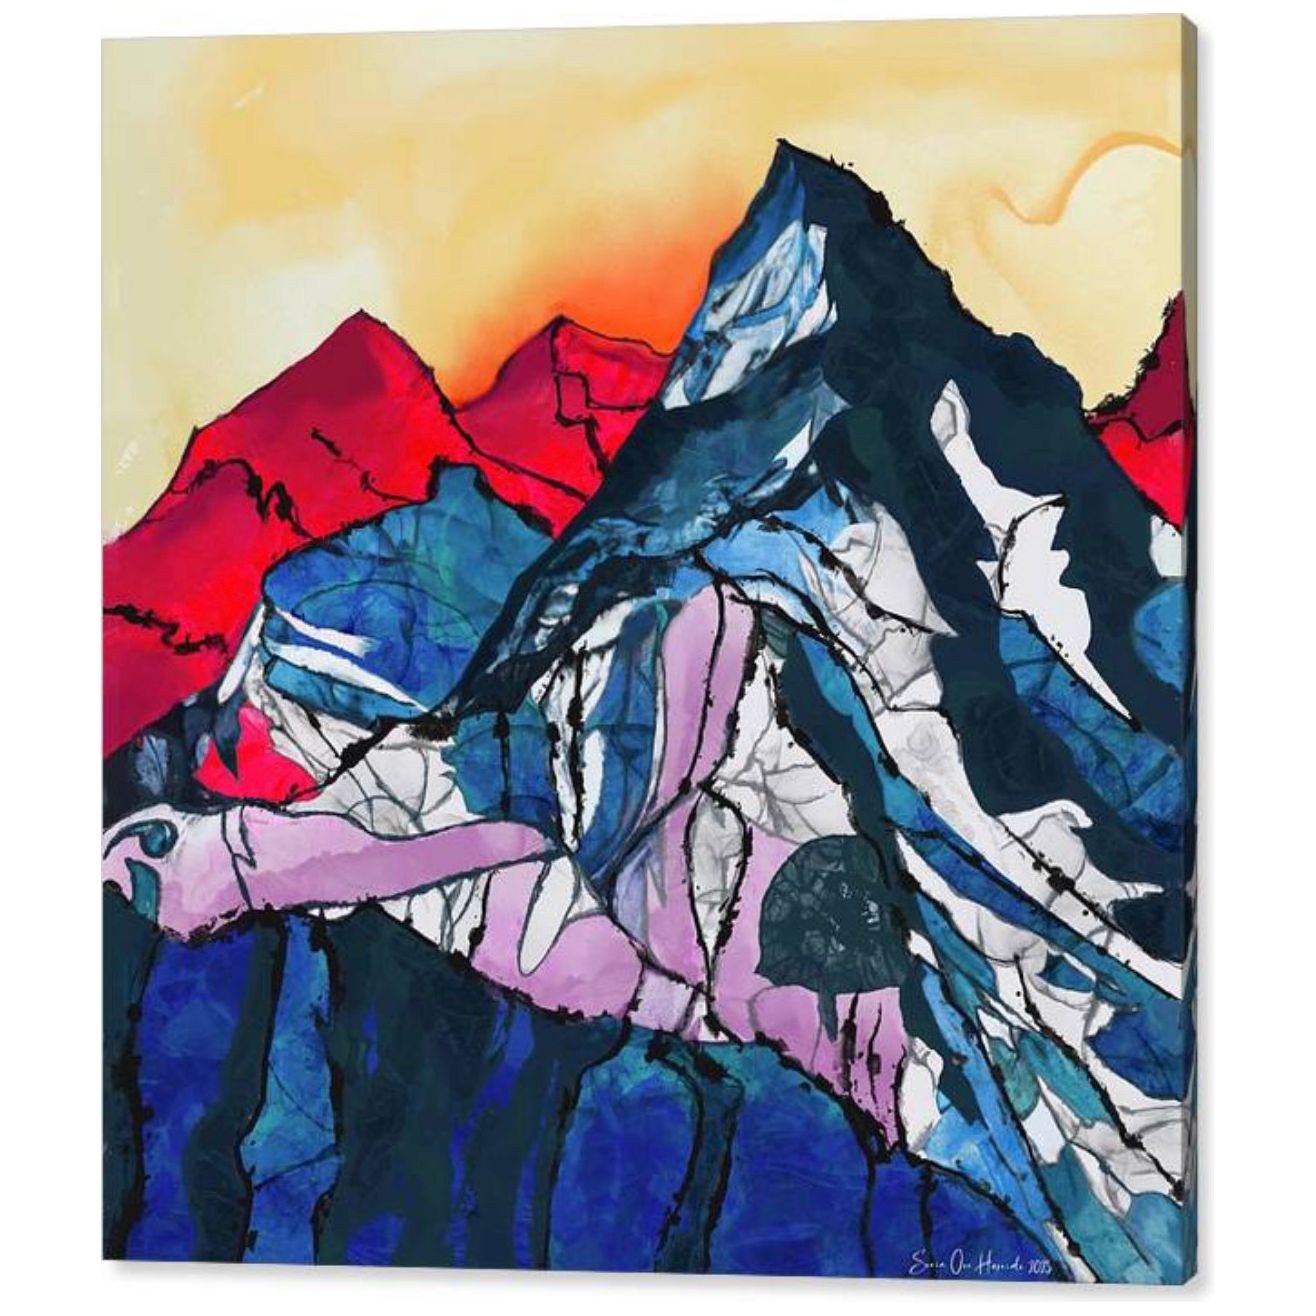 Segmentert fjellandskap på Canvas